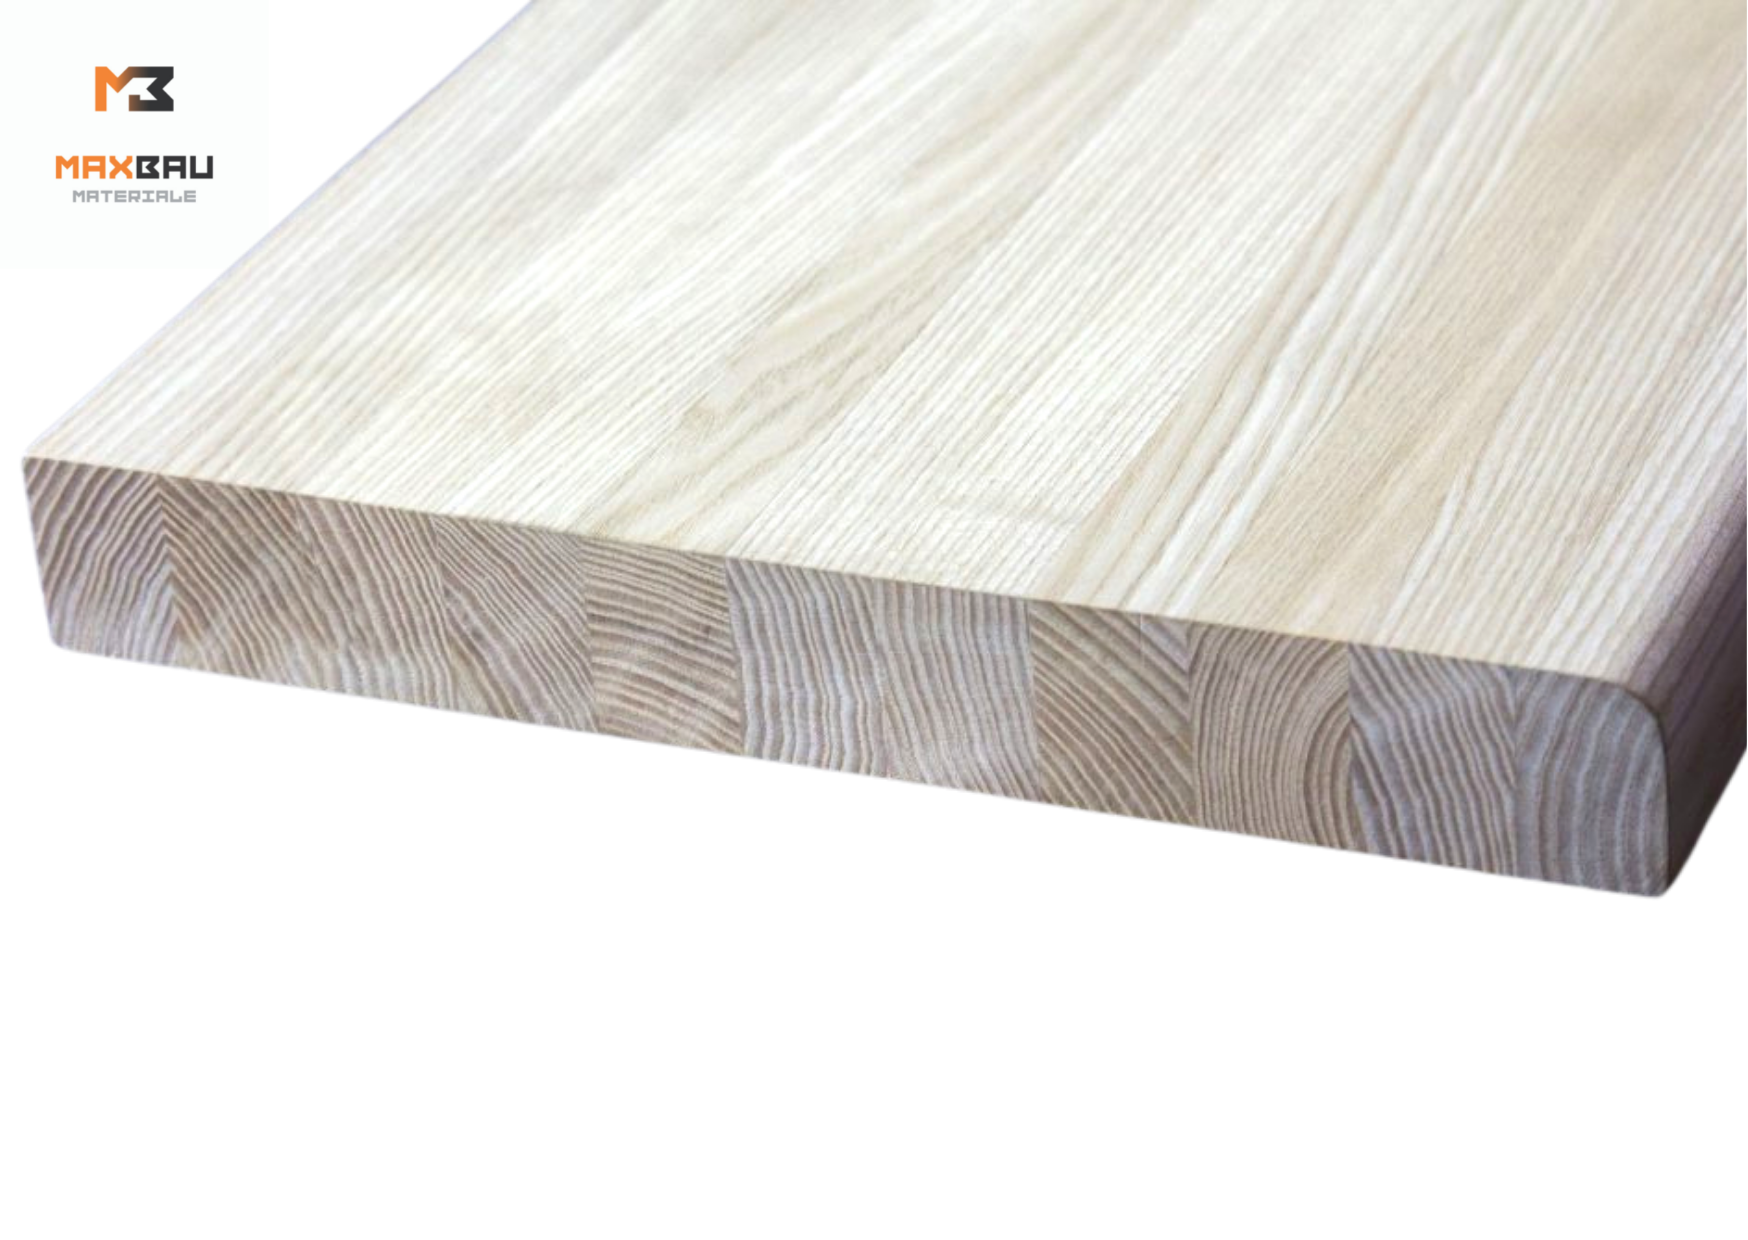 Placi din lemn incleiat - Placa de lemn incleiat MaxBau 800 x 200 x 28 mm Clasa AB, https:maxbau.ro